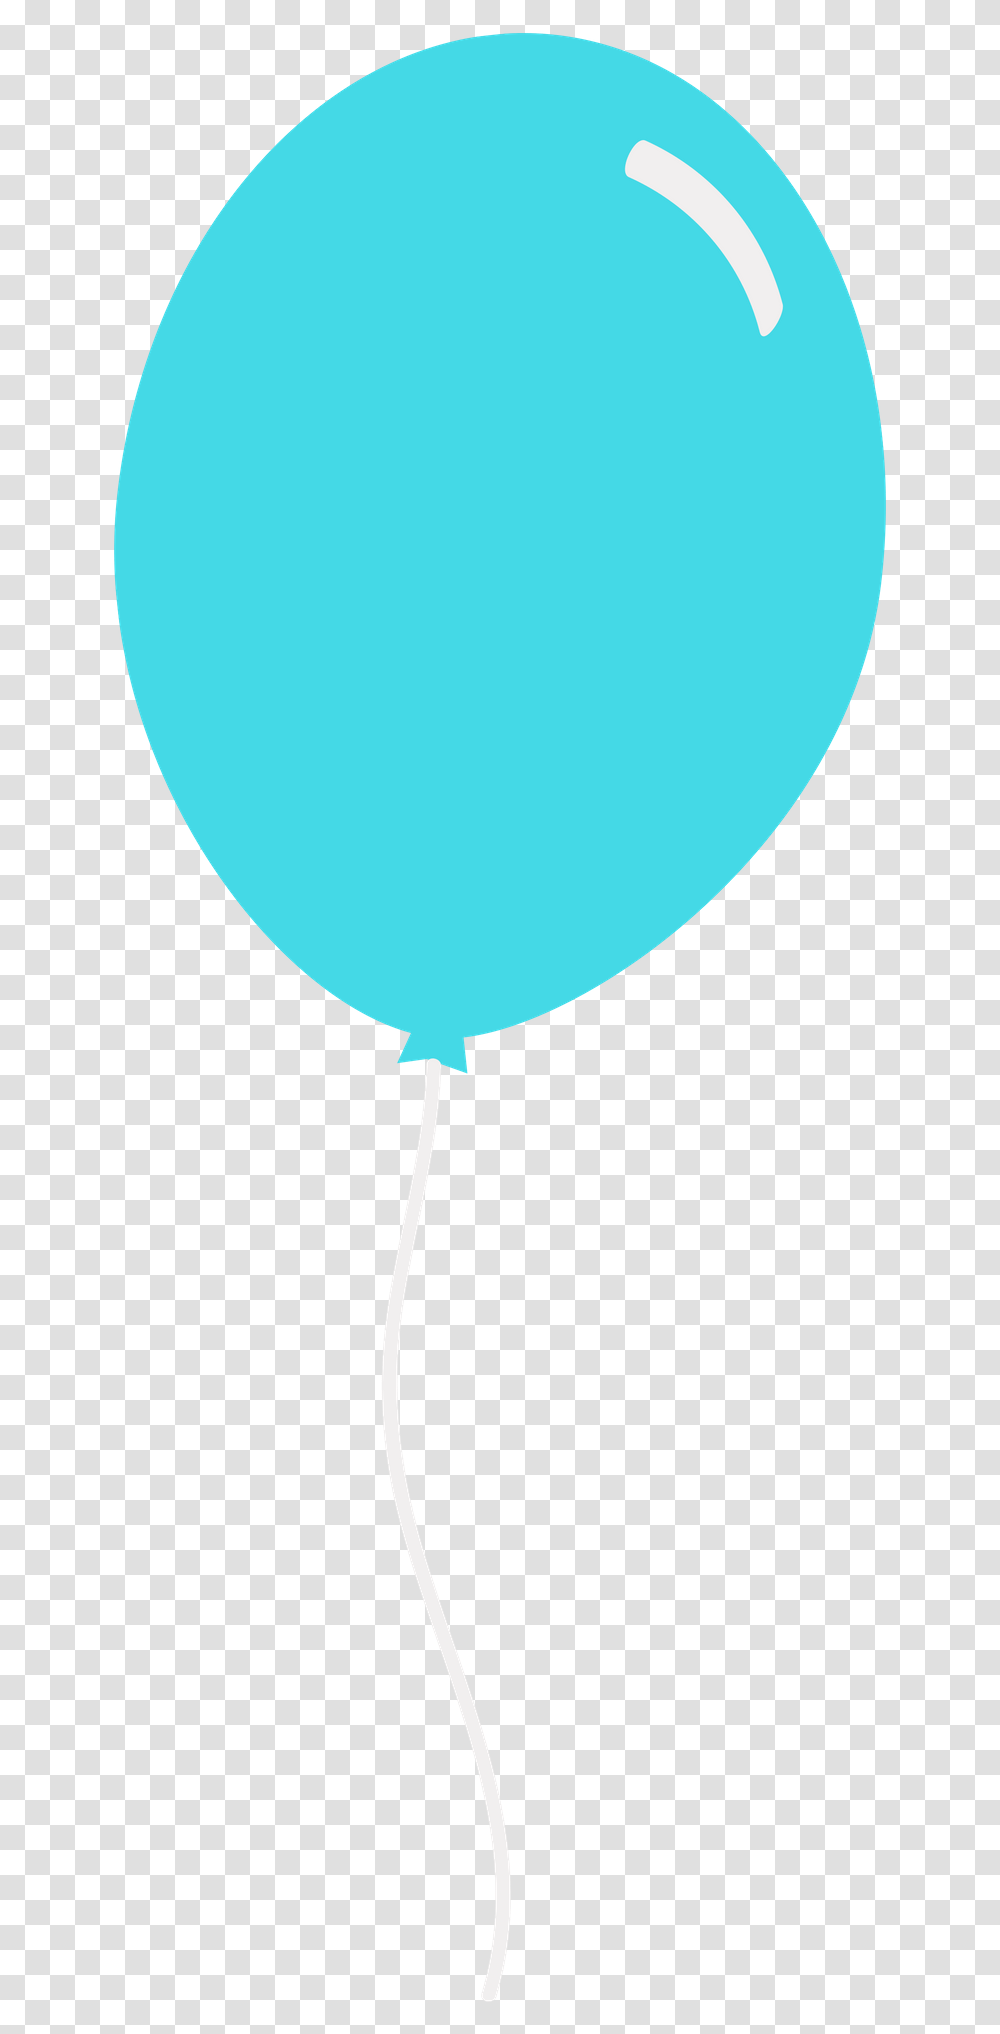 Blue Ballon Picture Balloon Transparent Png